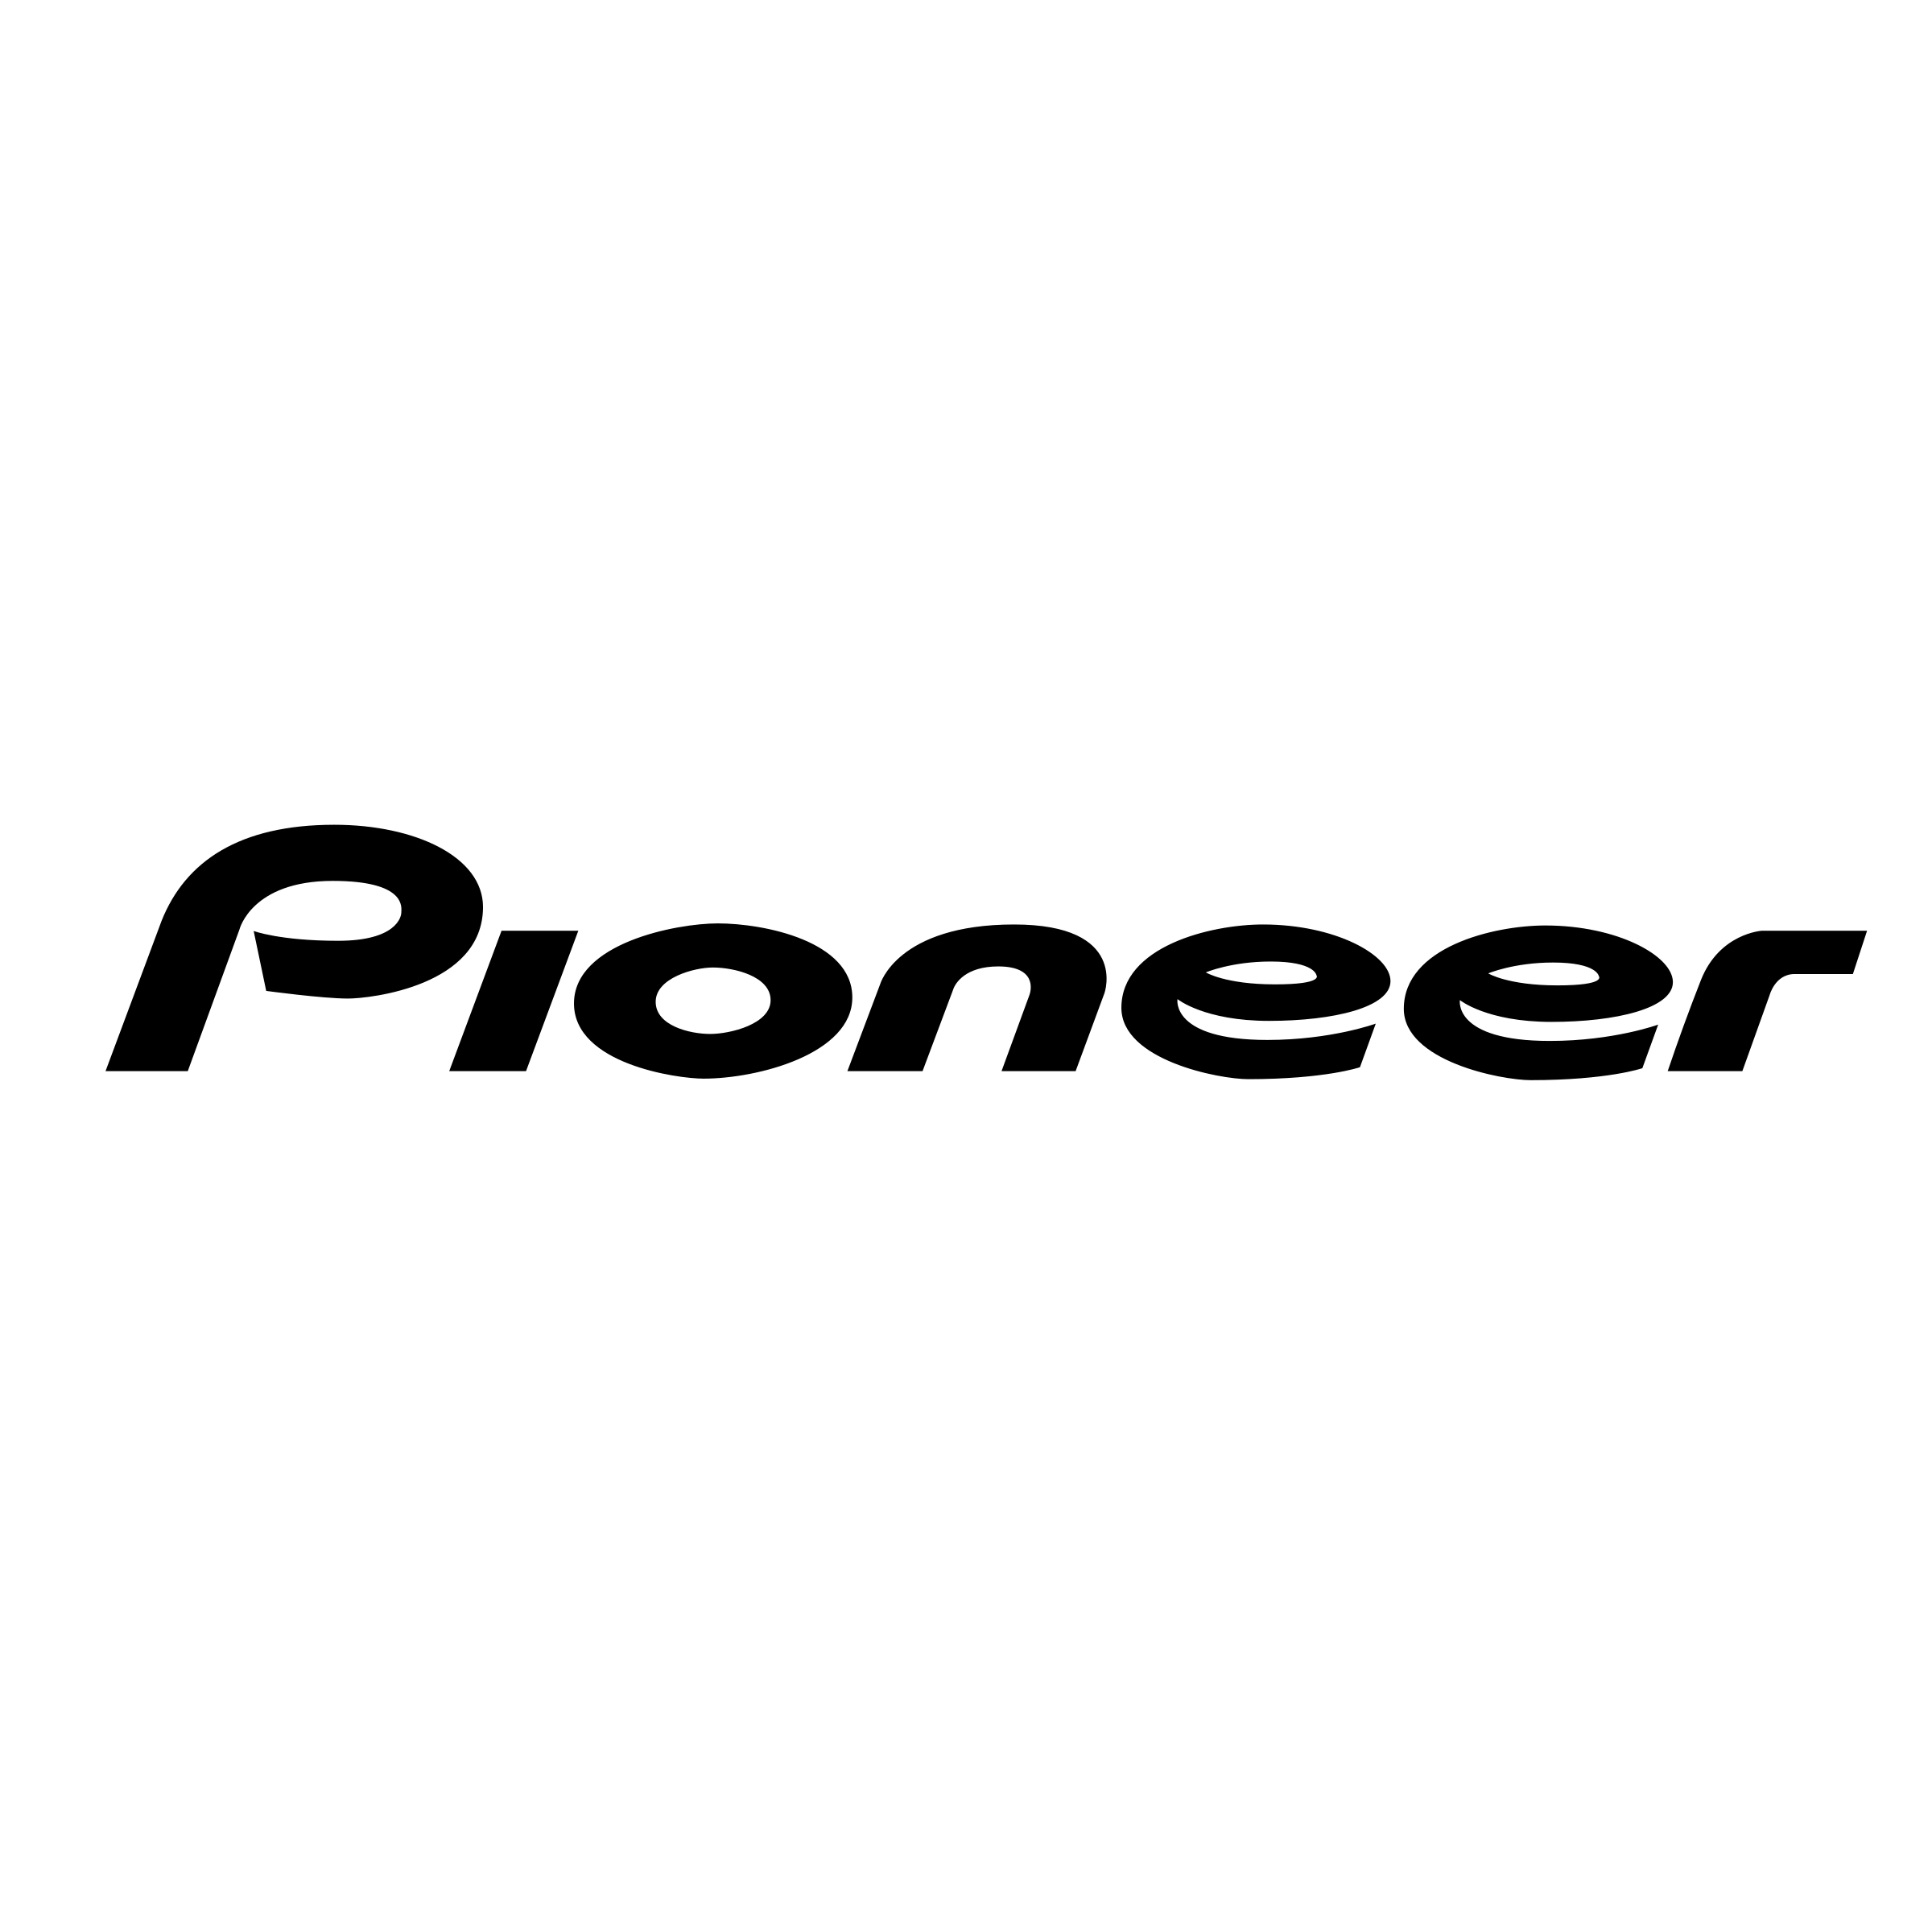 White Pioneer Logo - Pioneer Logo PNG Transparent & SVG Vector - Freebie Supply